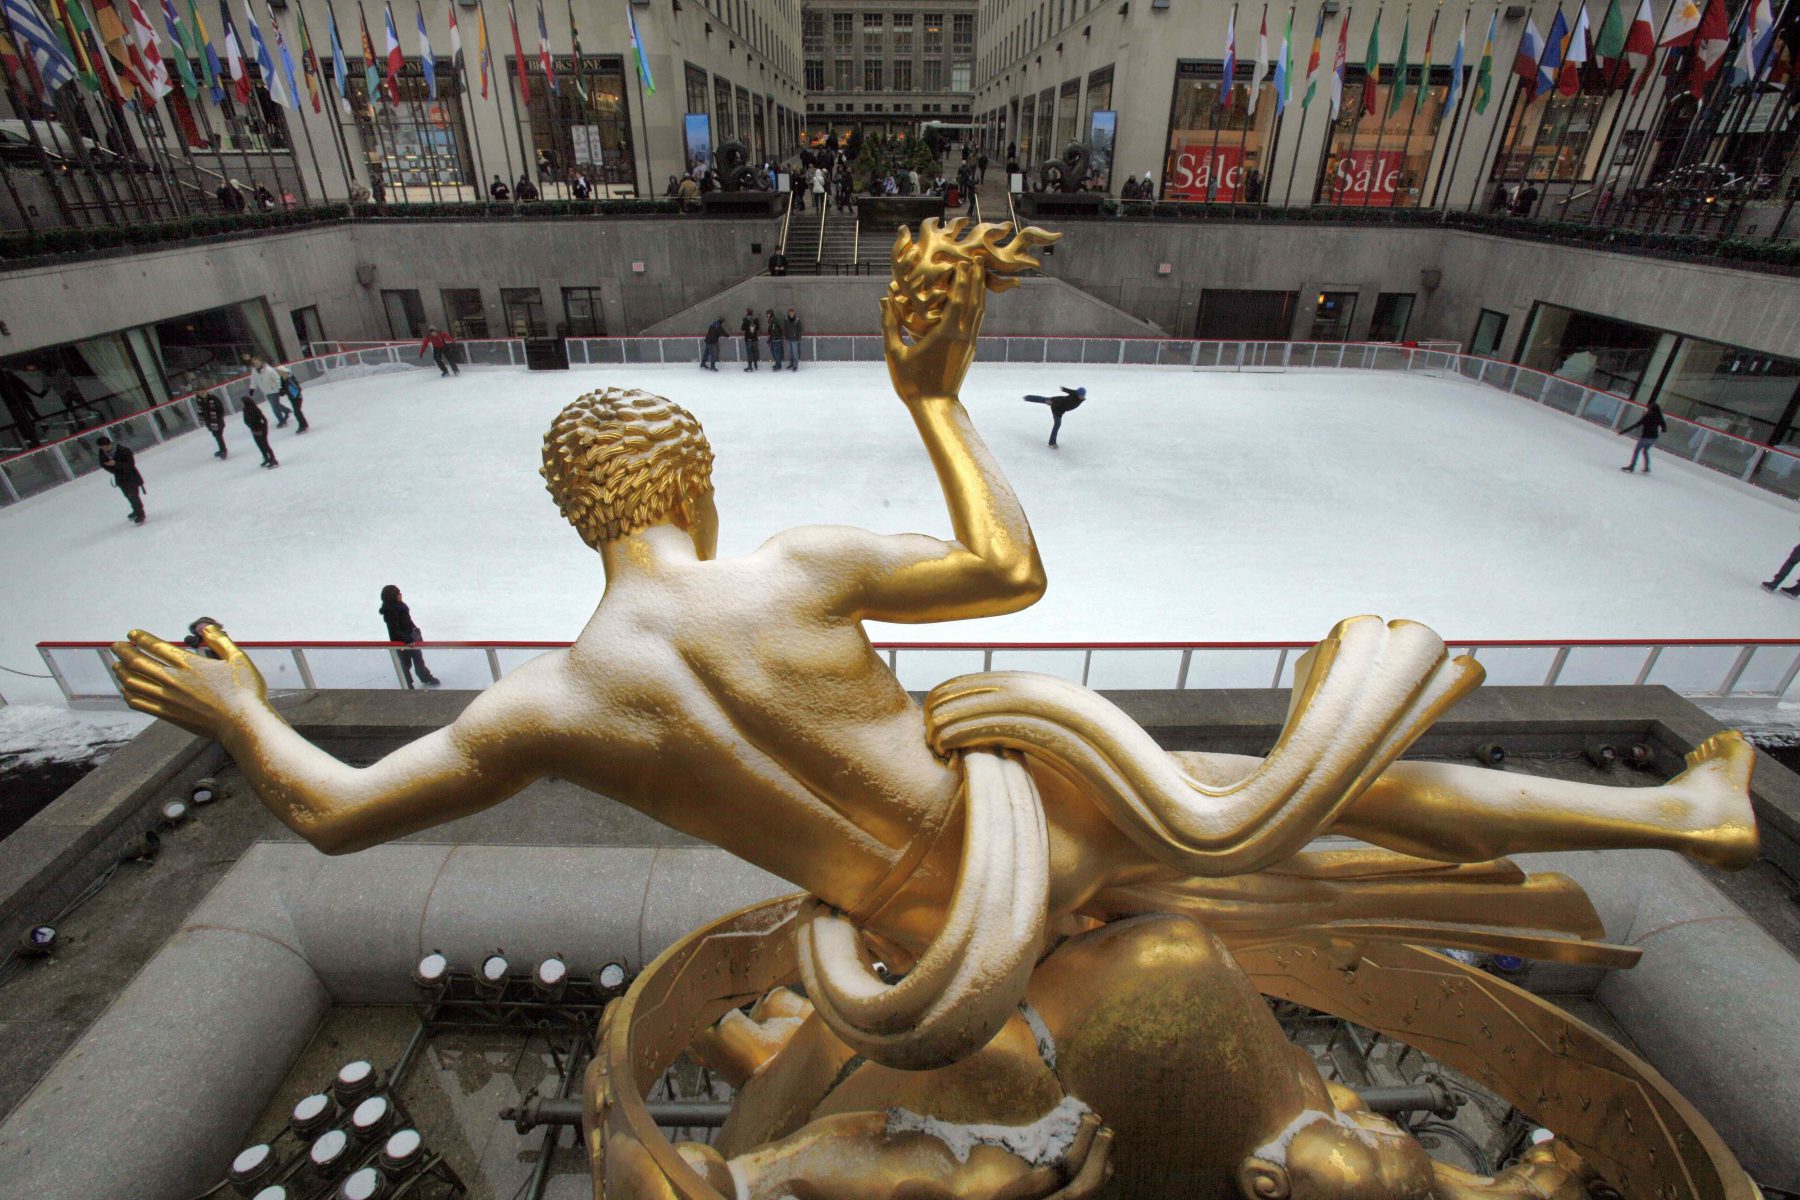 The snow-covered statue of Prometheus overlooks the ice skating rink in New York's Rockefeller Center, Friday, Jan. 8, 2010. (AP Photo/Richard Drew)